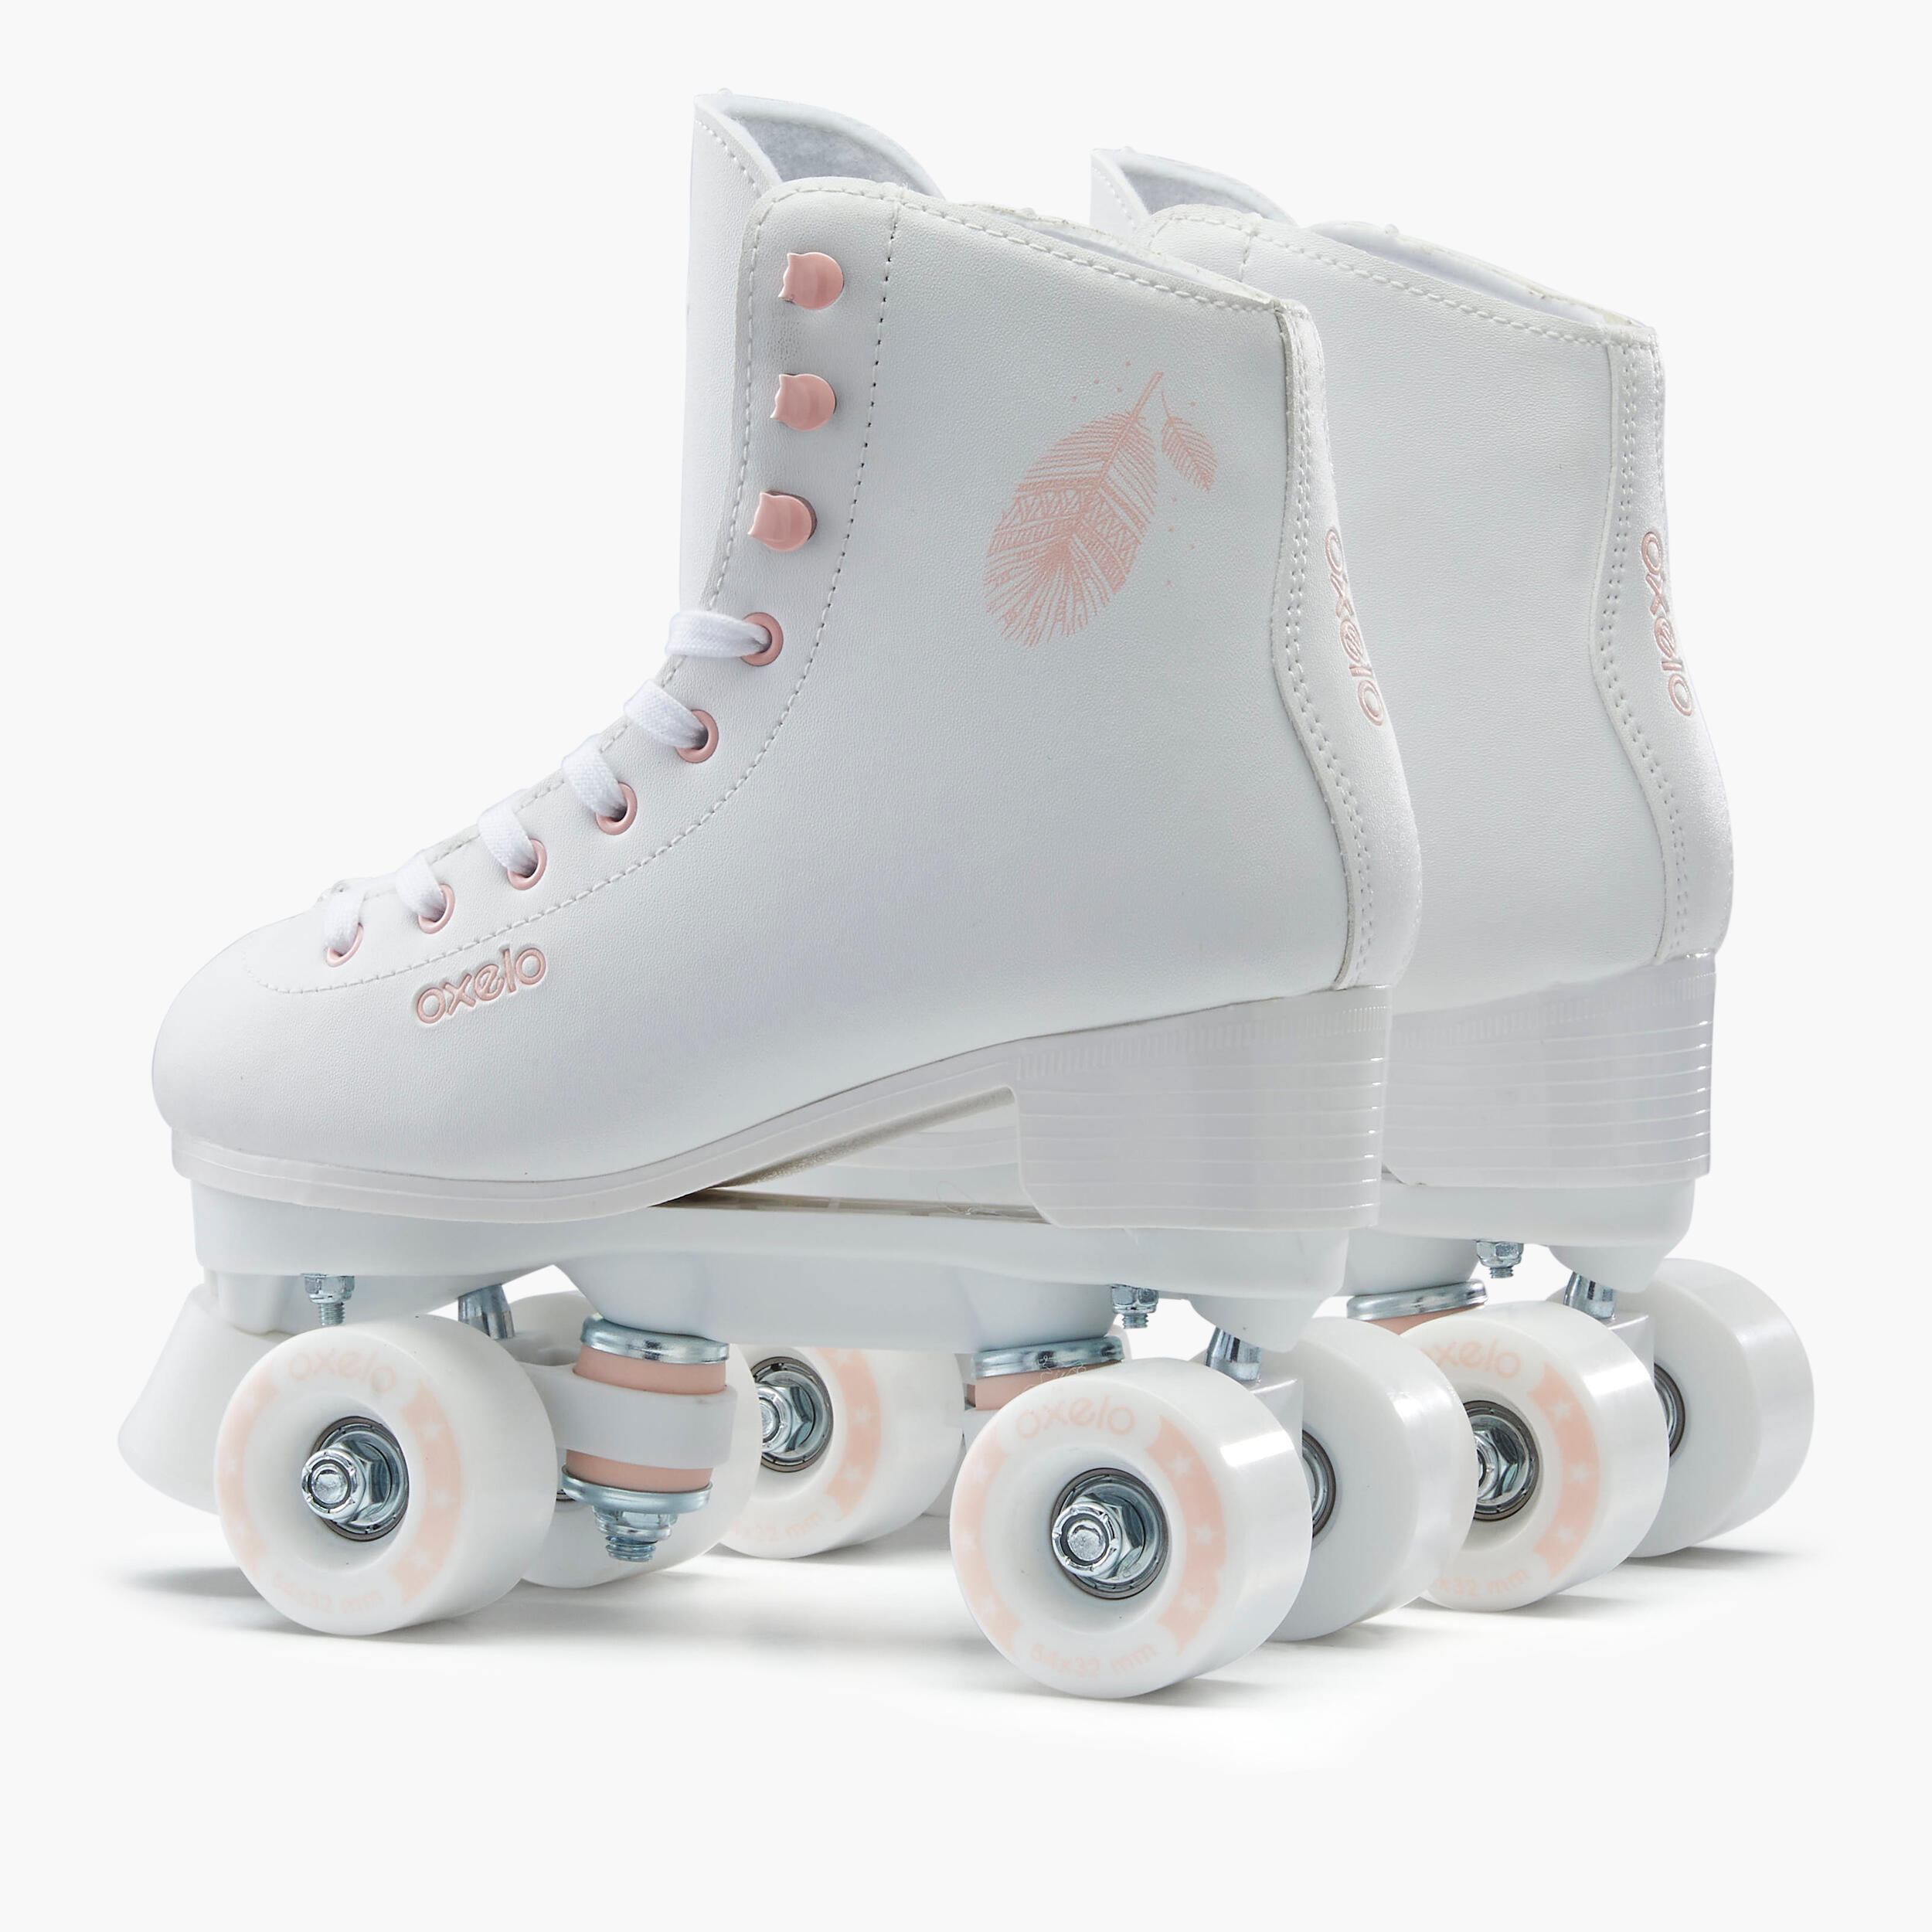 Artistic Roller Skates Quad 100 Small Size - White 6/9